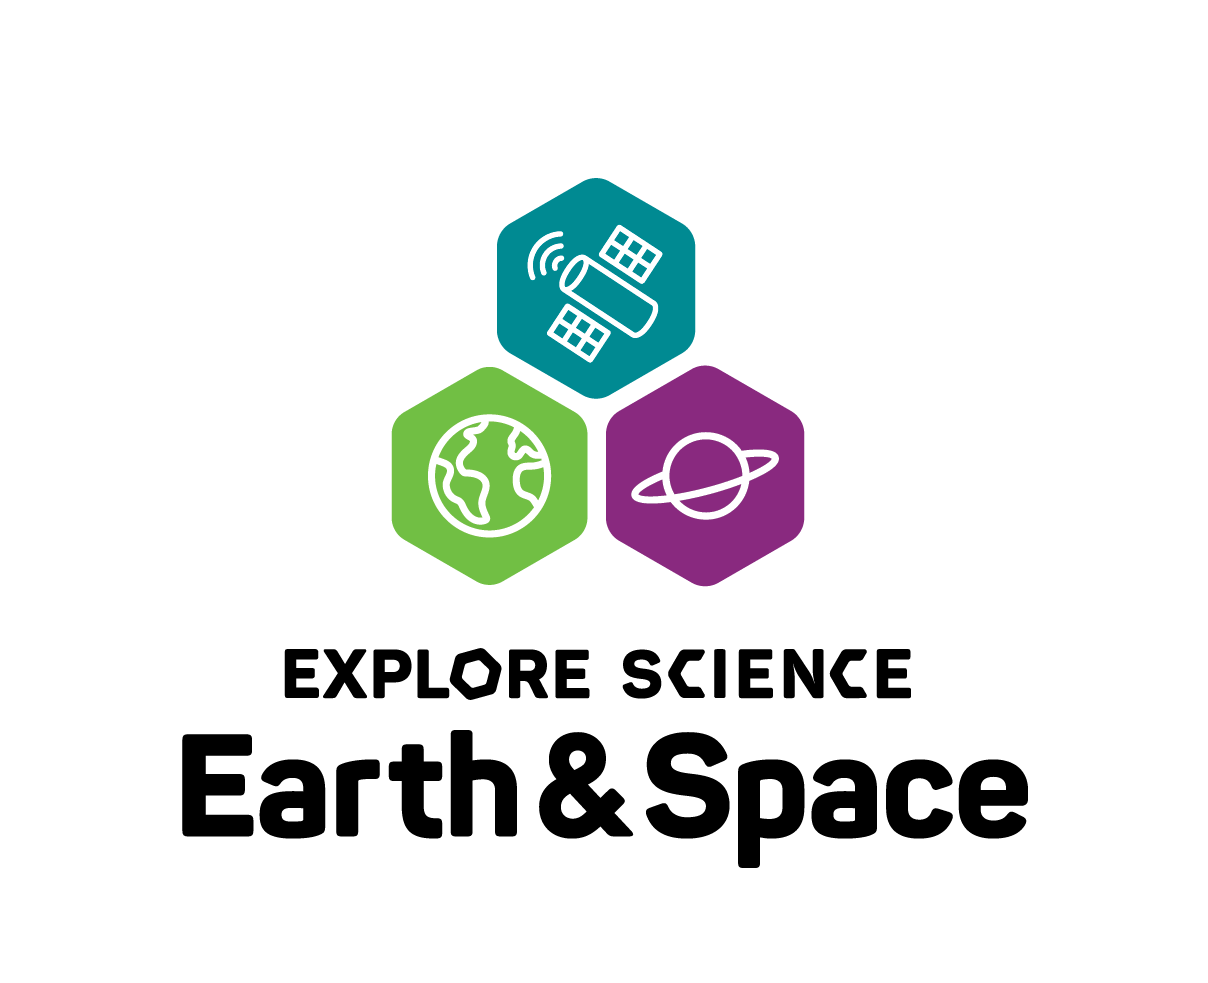 Explore Science Earth & Space logo